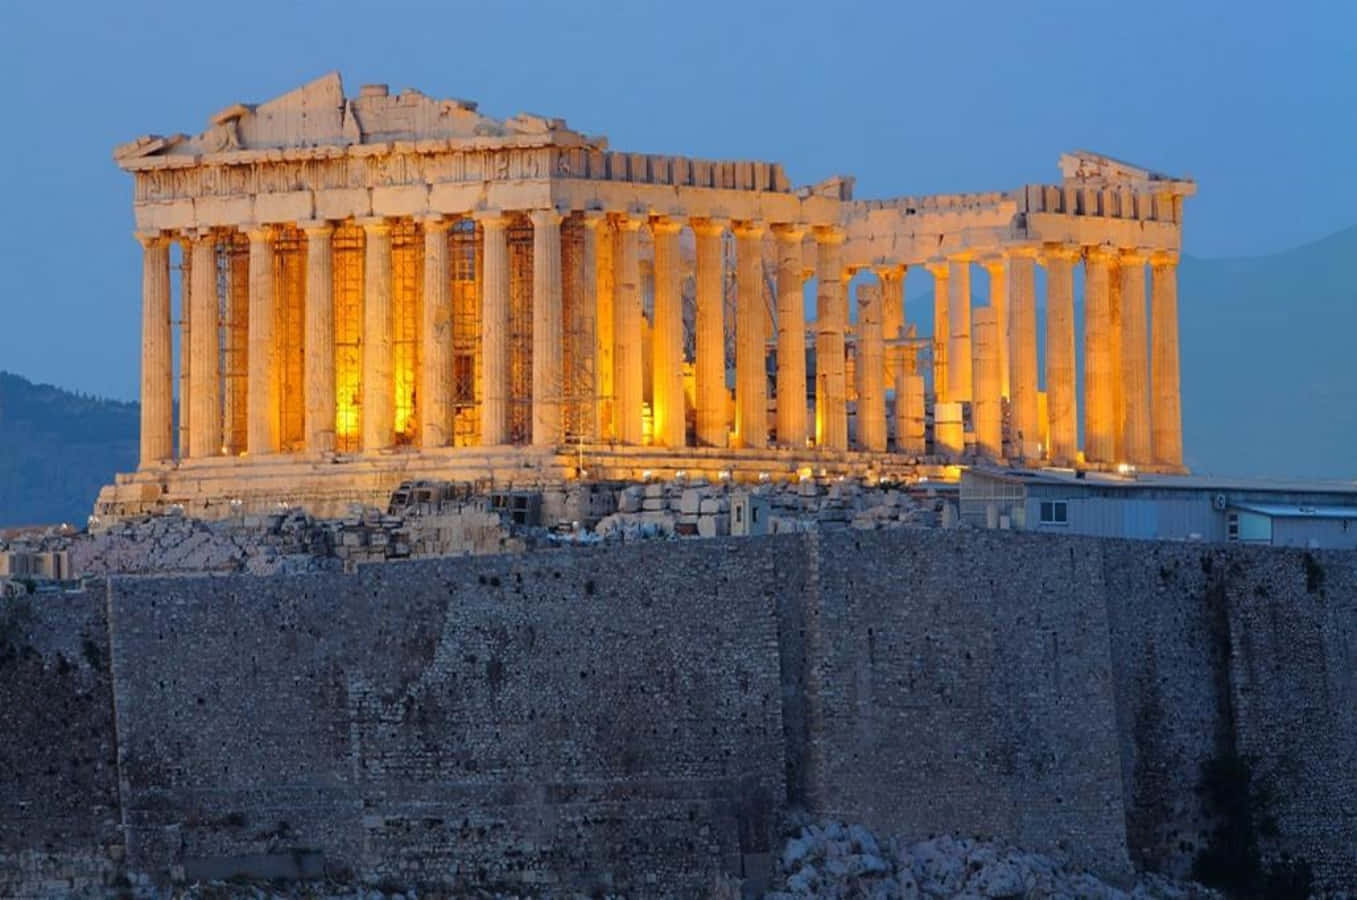 "Exploring the Wonders of Greece"